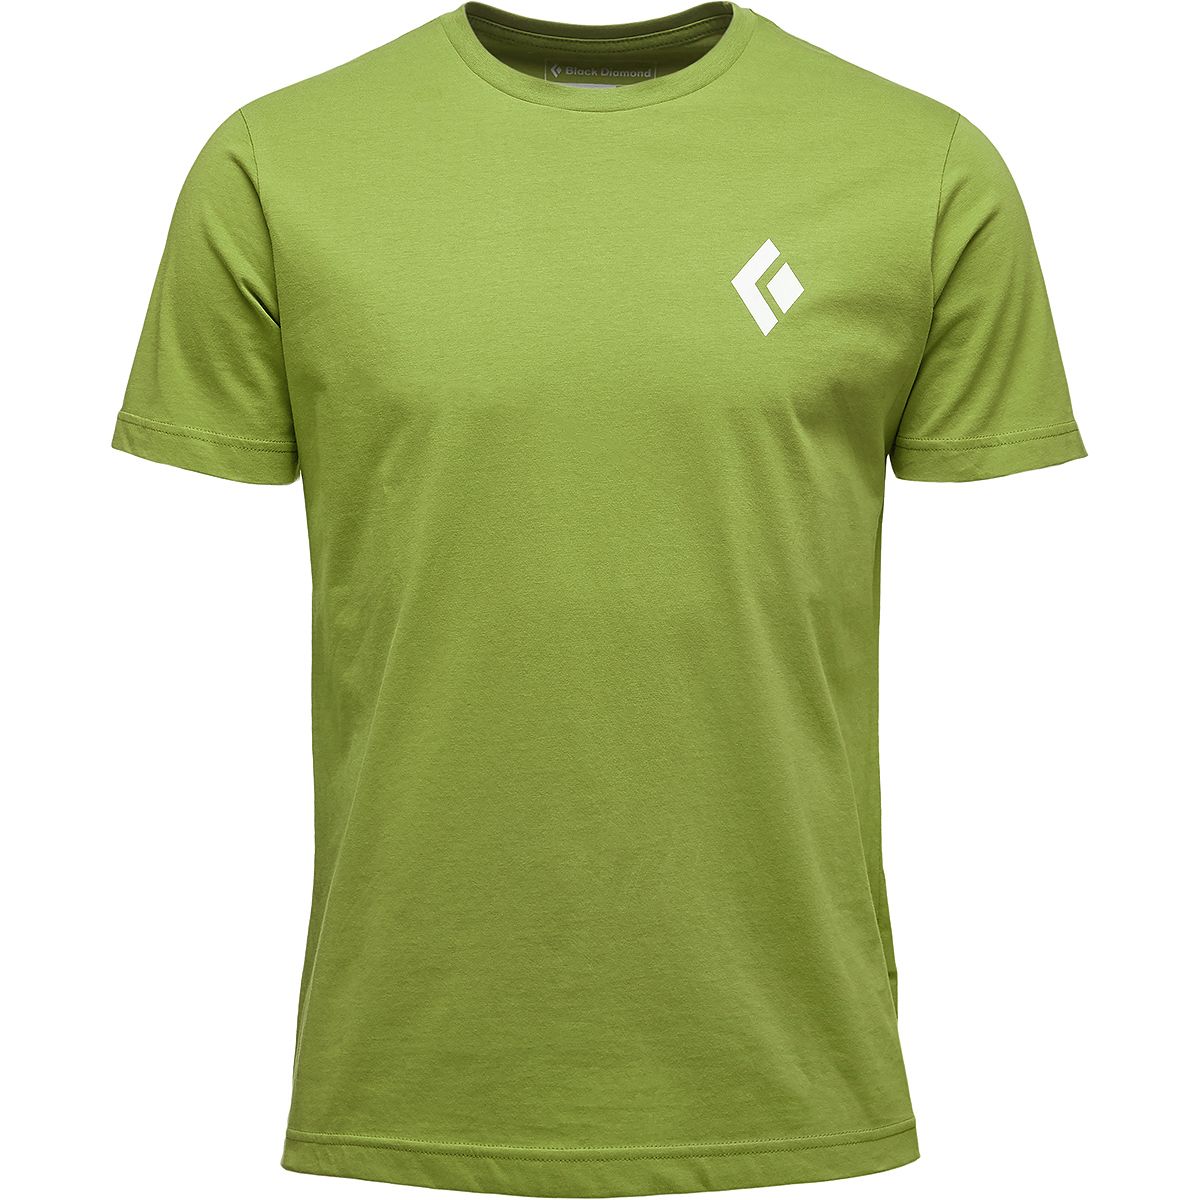 Equipment For Alpinists T-Shirt - Men